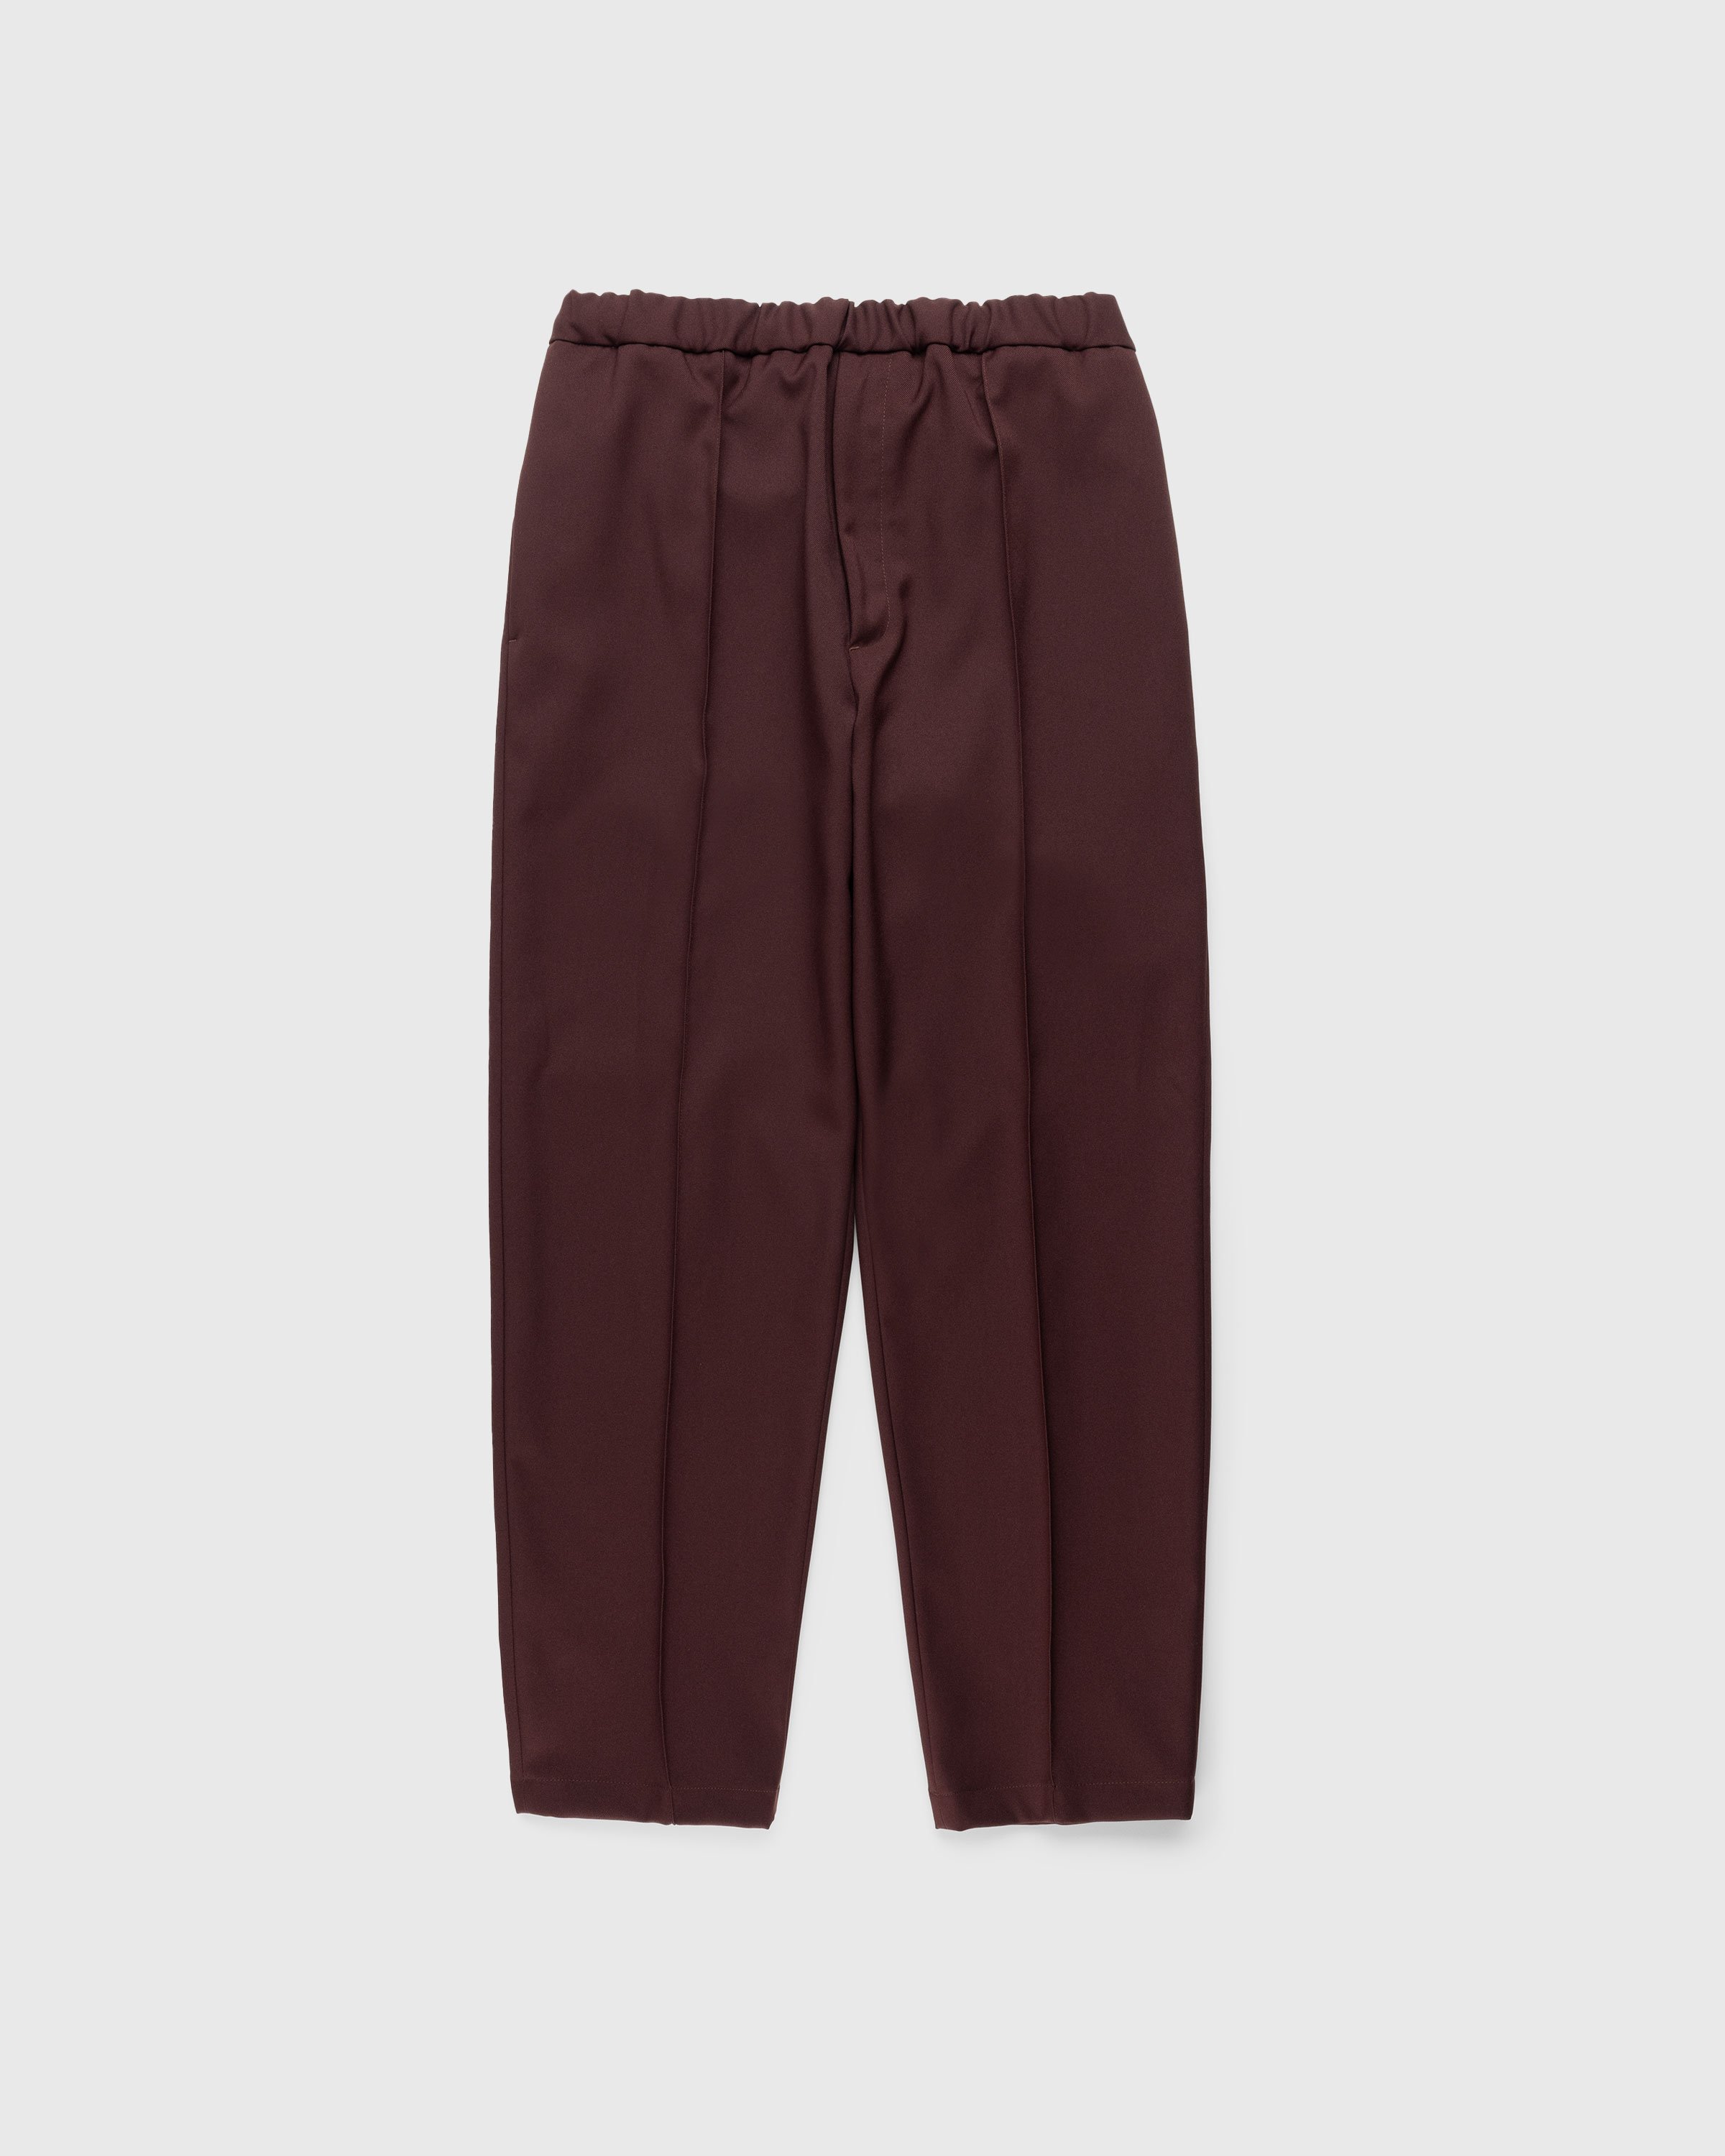 Jil Sander - Trouser D 09 AW 20 Mahogany - Clothing - Brown - Image 1